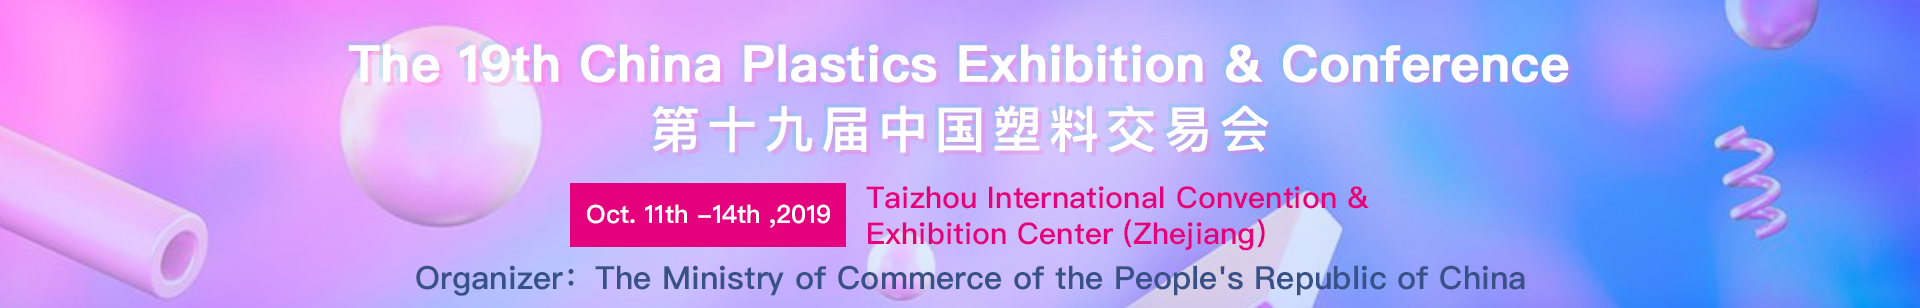 The 19th China Plastics Exhibition & Conference